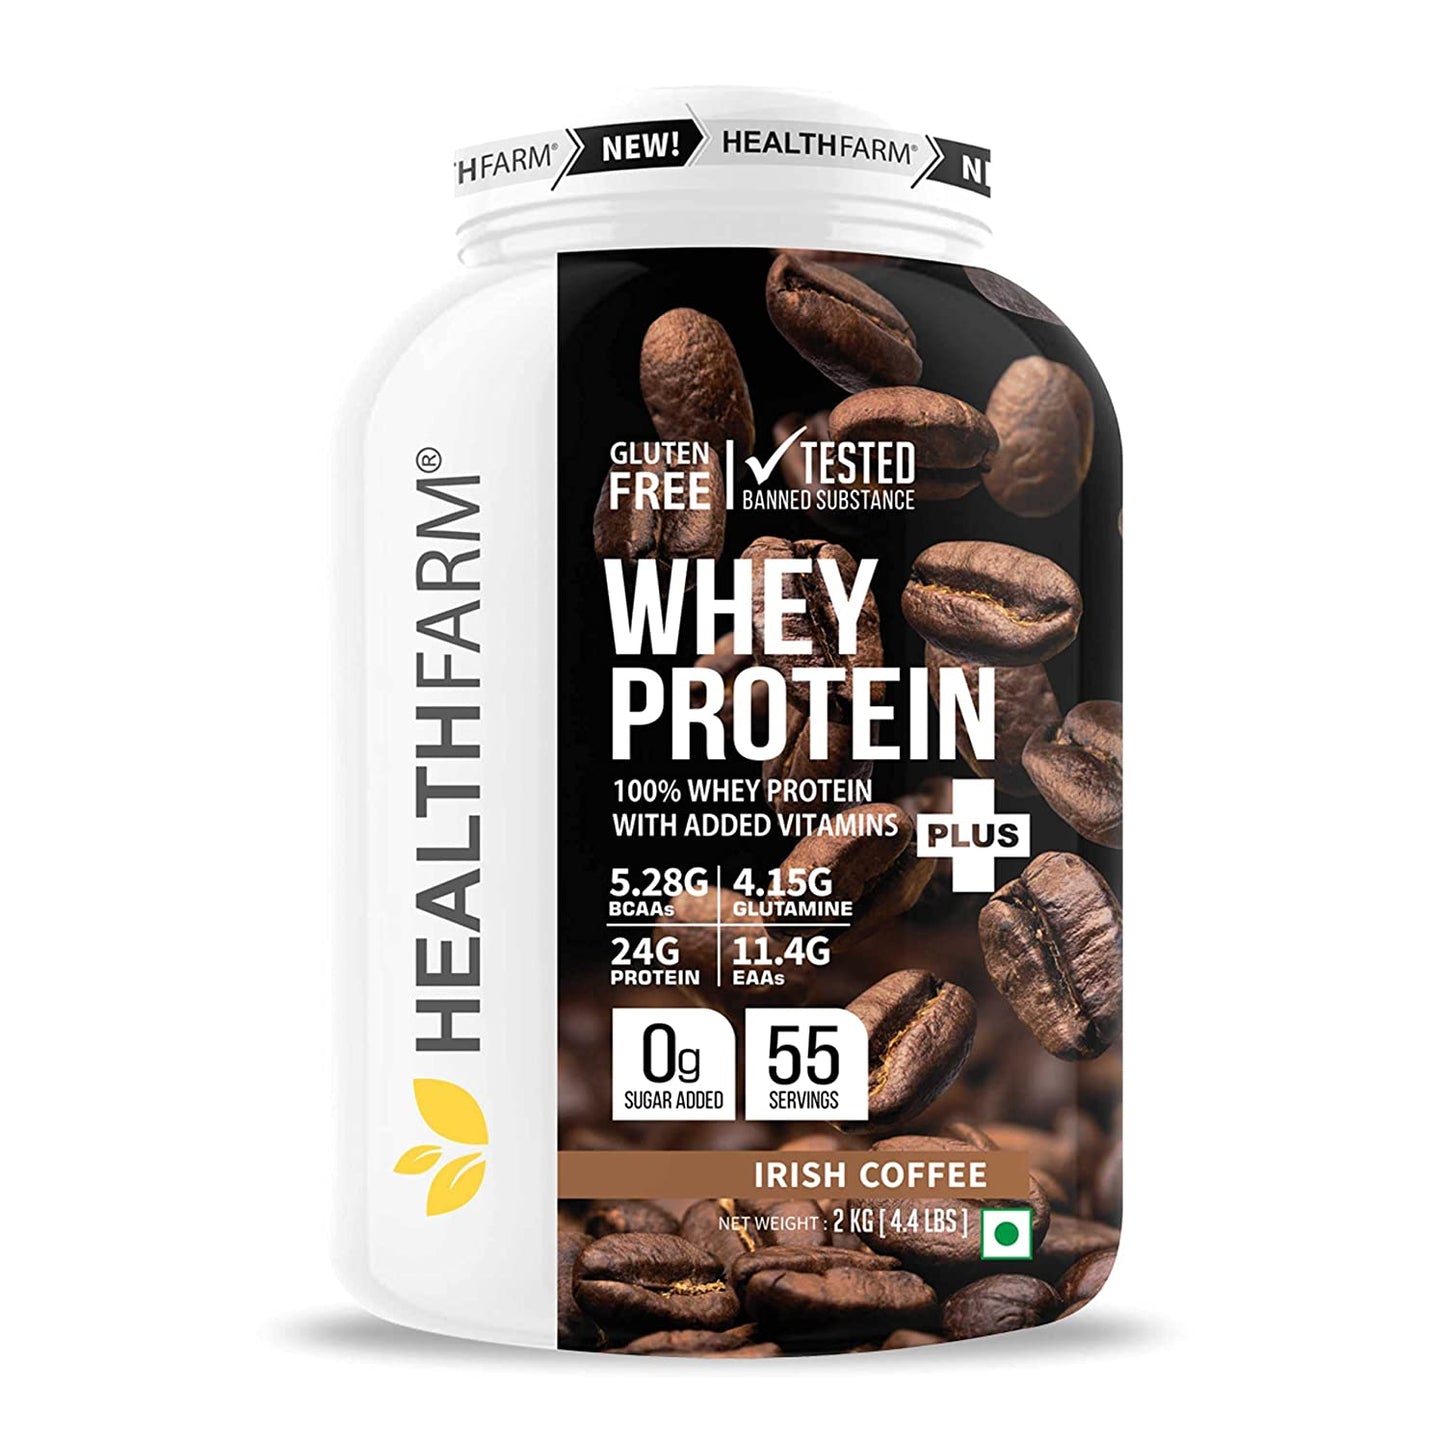 HEALTHFARM Whey protein plus with added vitamins - Healthfarm - HF_WheyPlus_IC